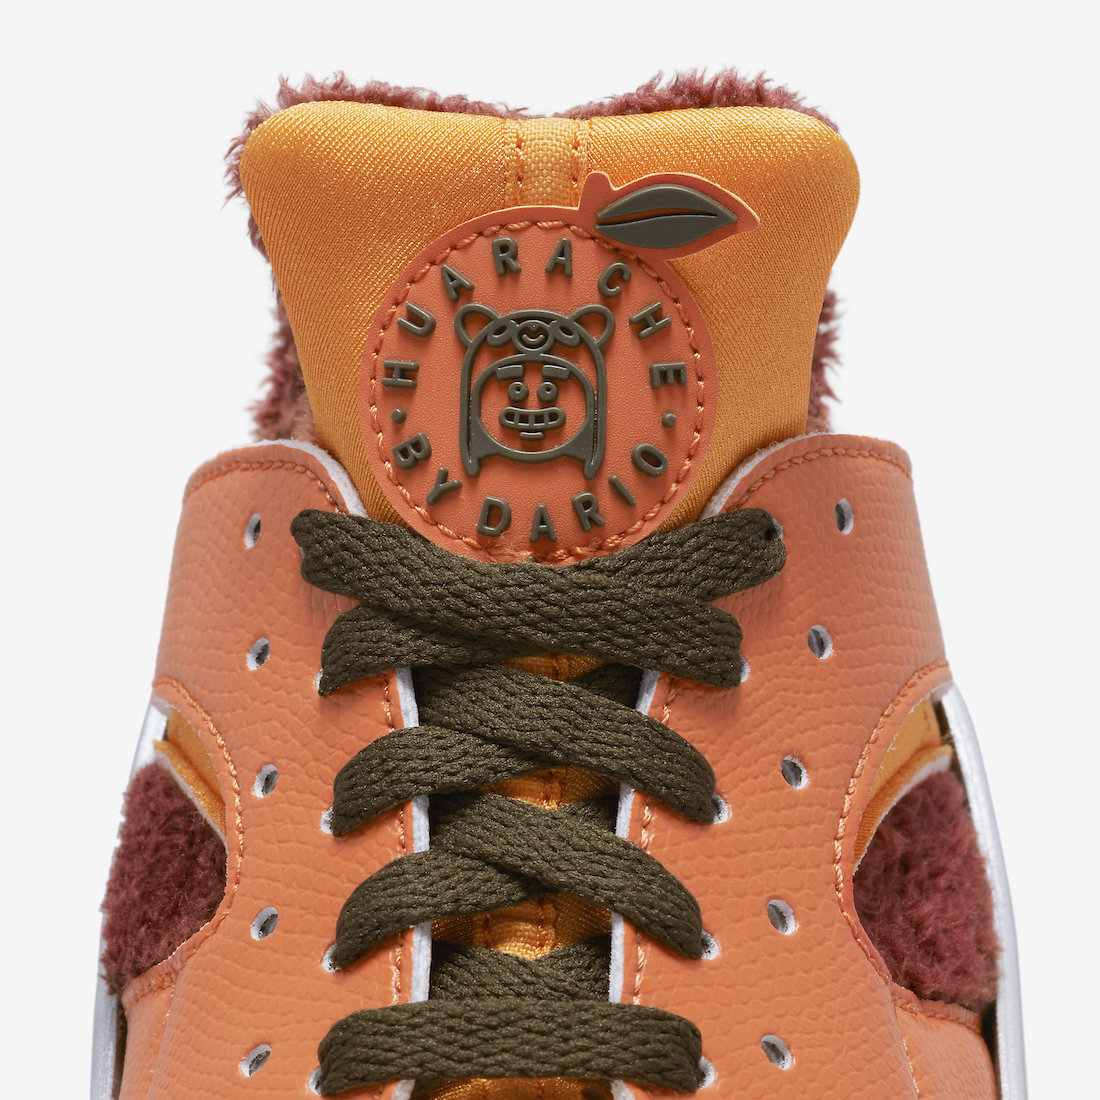 Size+11+-+Nike+Air+Huarache+Firewood+Orange for sale online